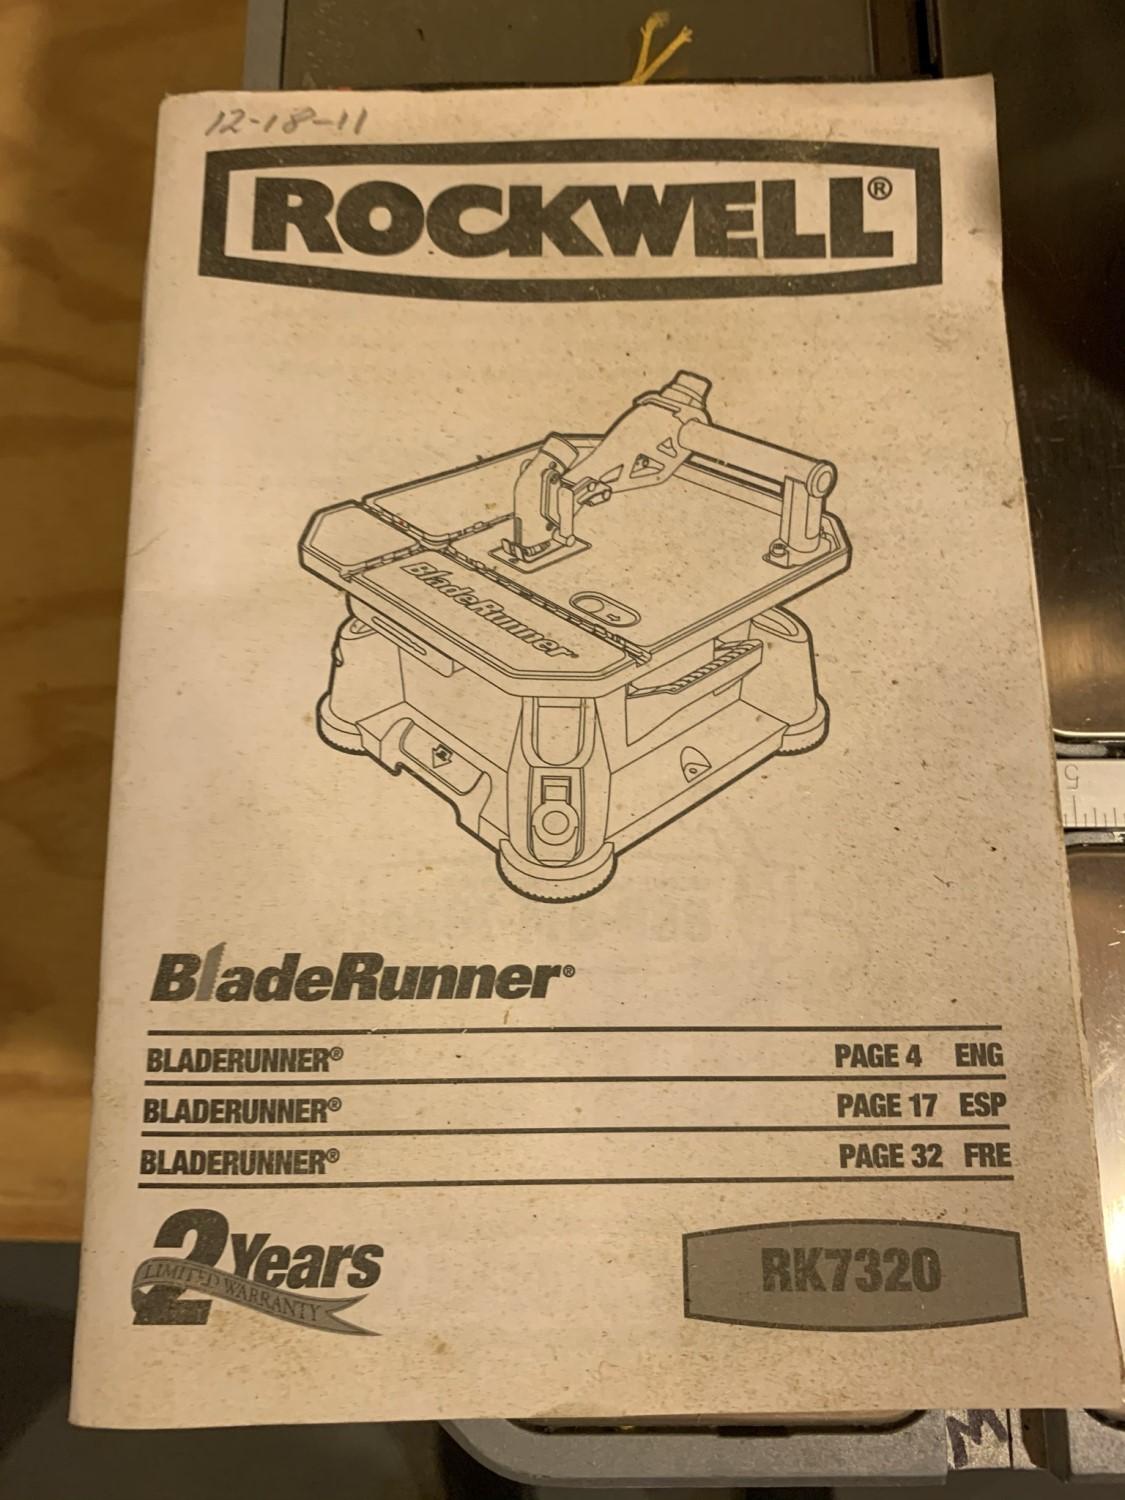 Rockwell Bladerunner